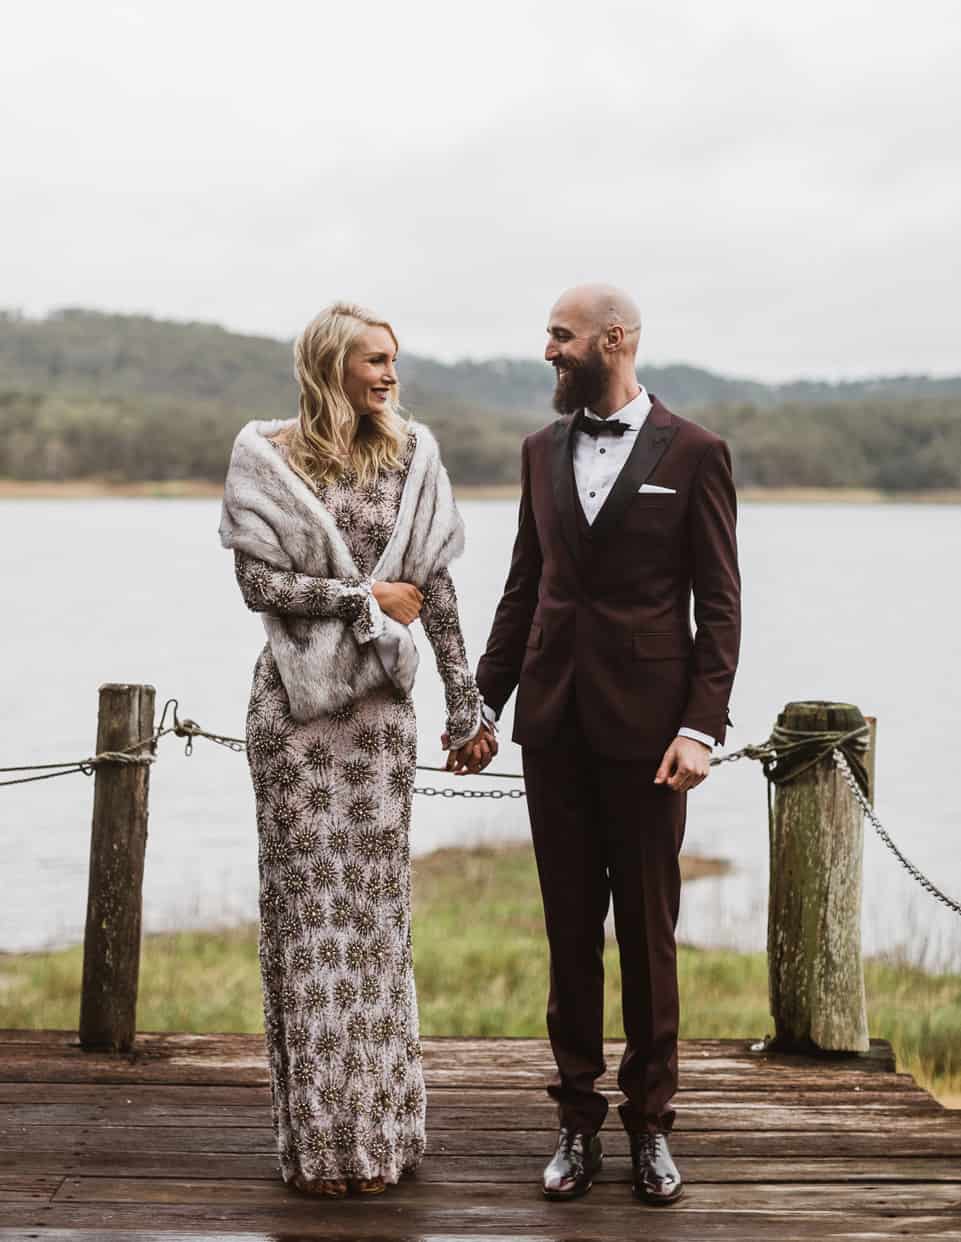 Top 10 weddings of 2016 - Brisbane wedding photography by Janneke Storm